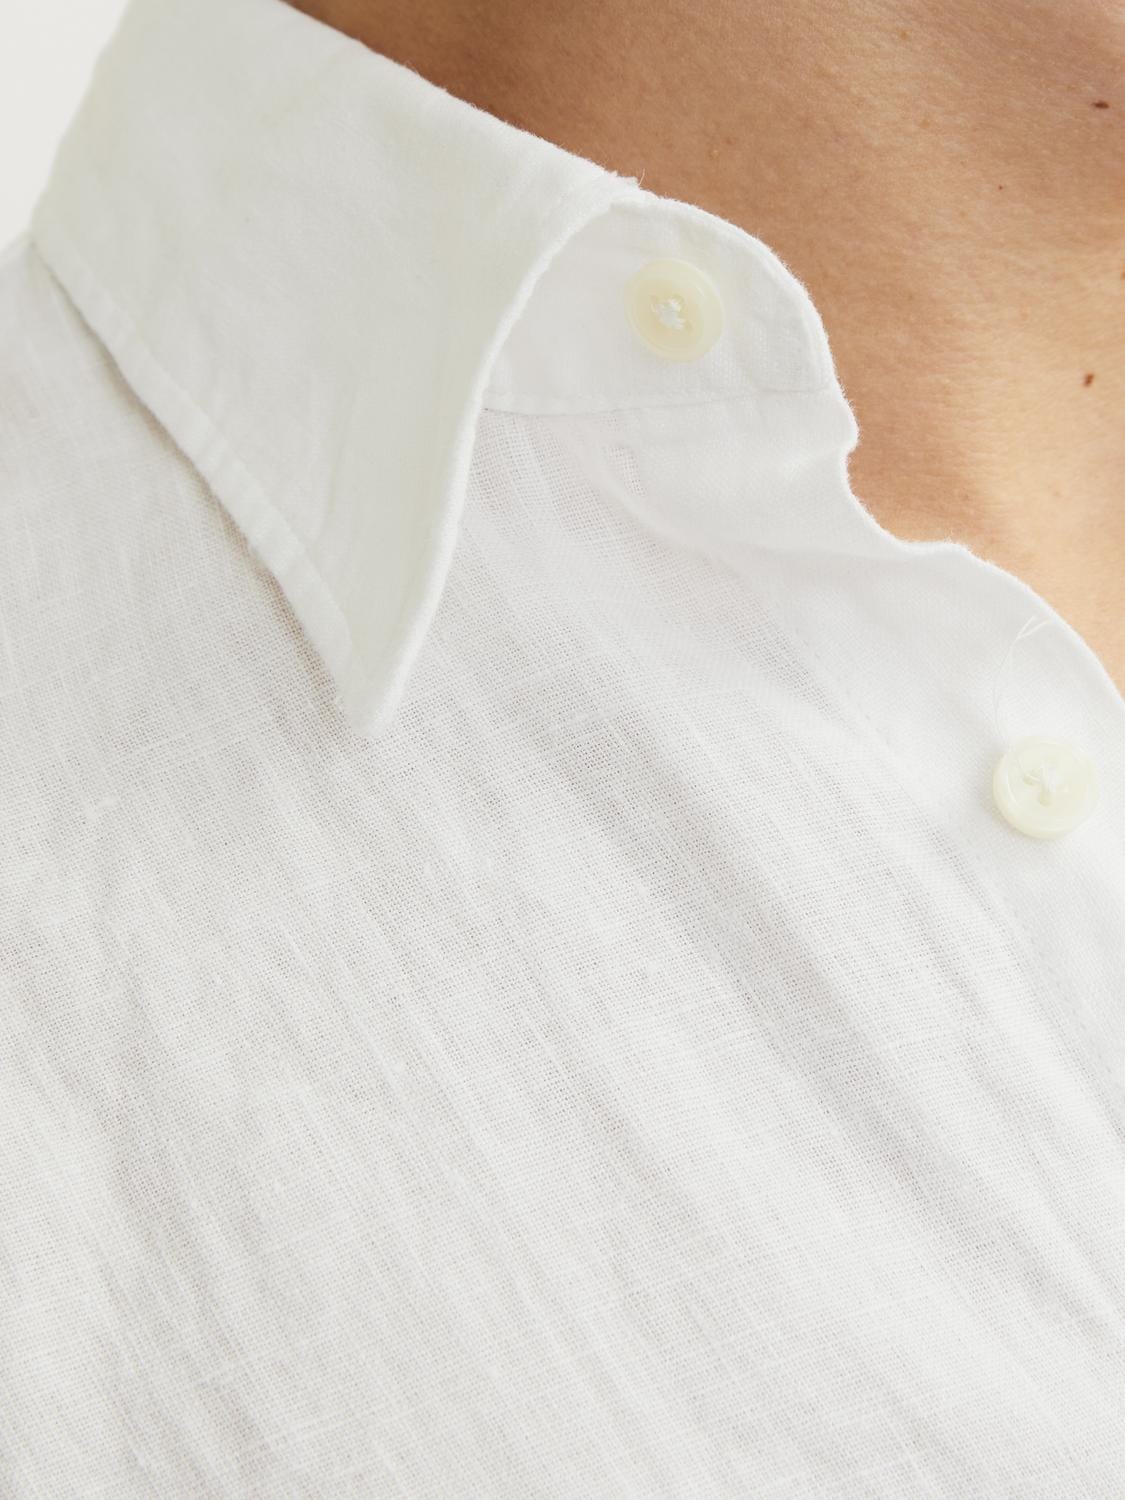 Camisa lino blanca - JPRCCLAWRENCE